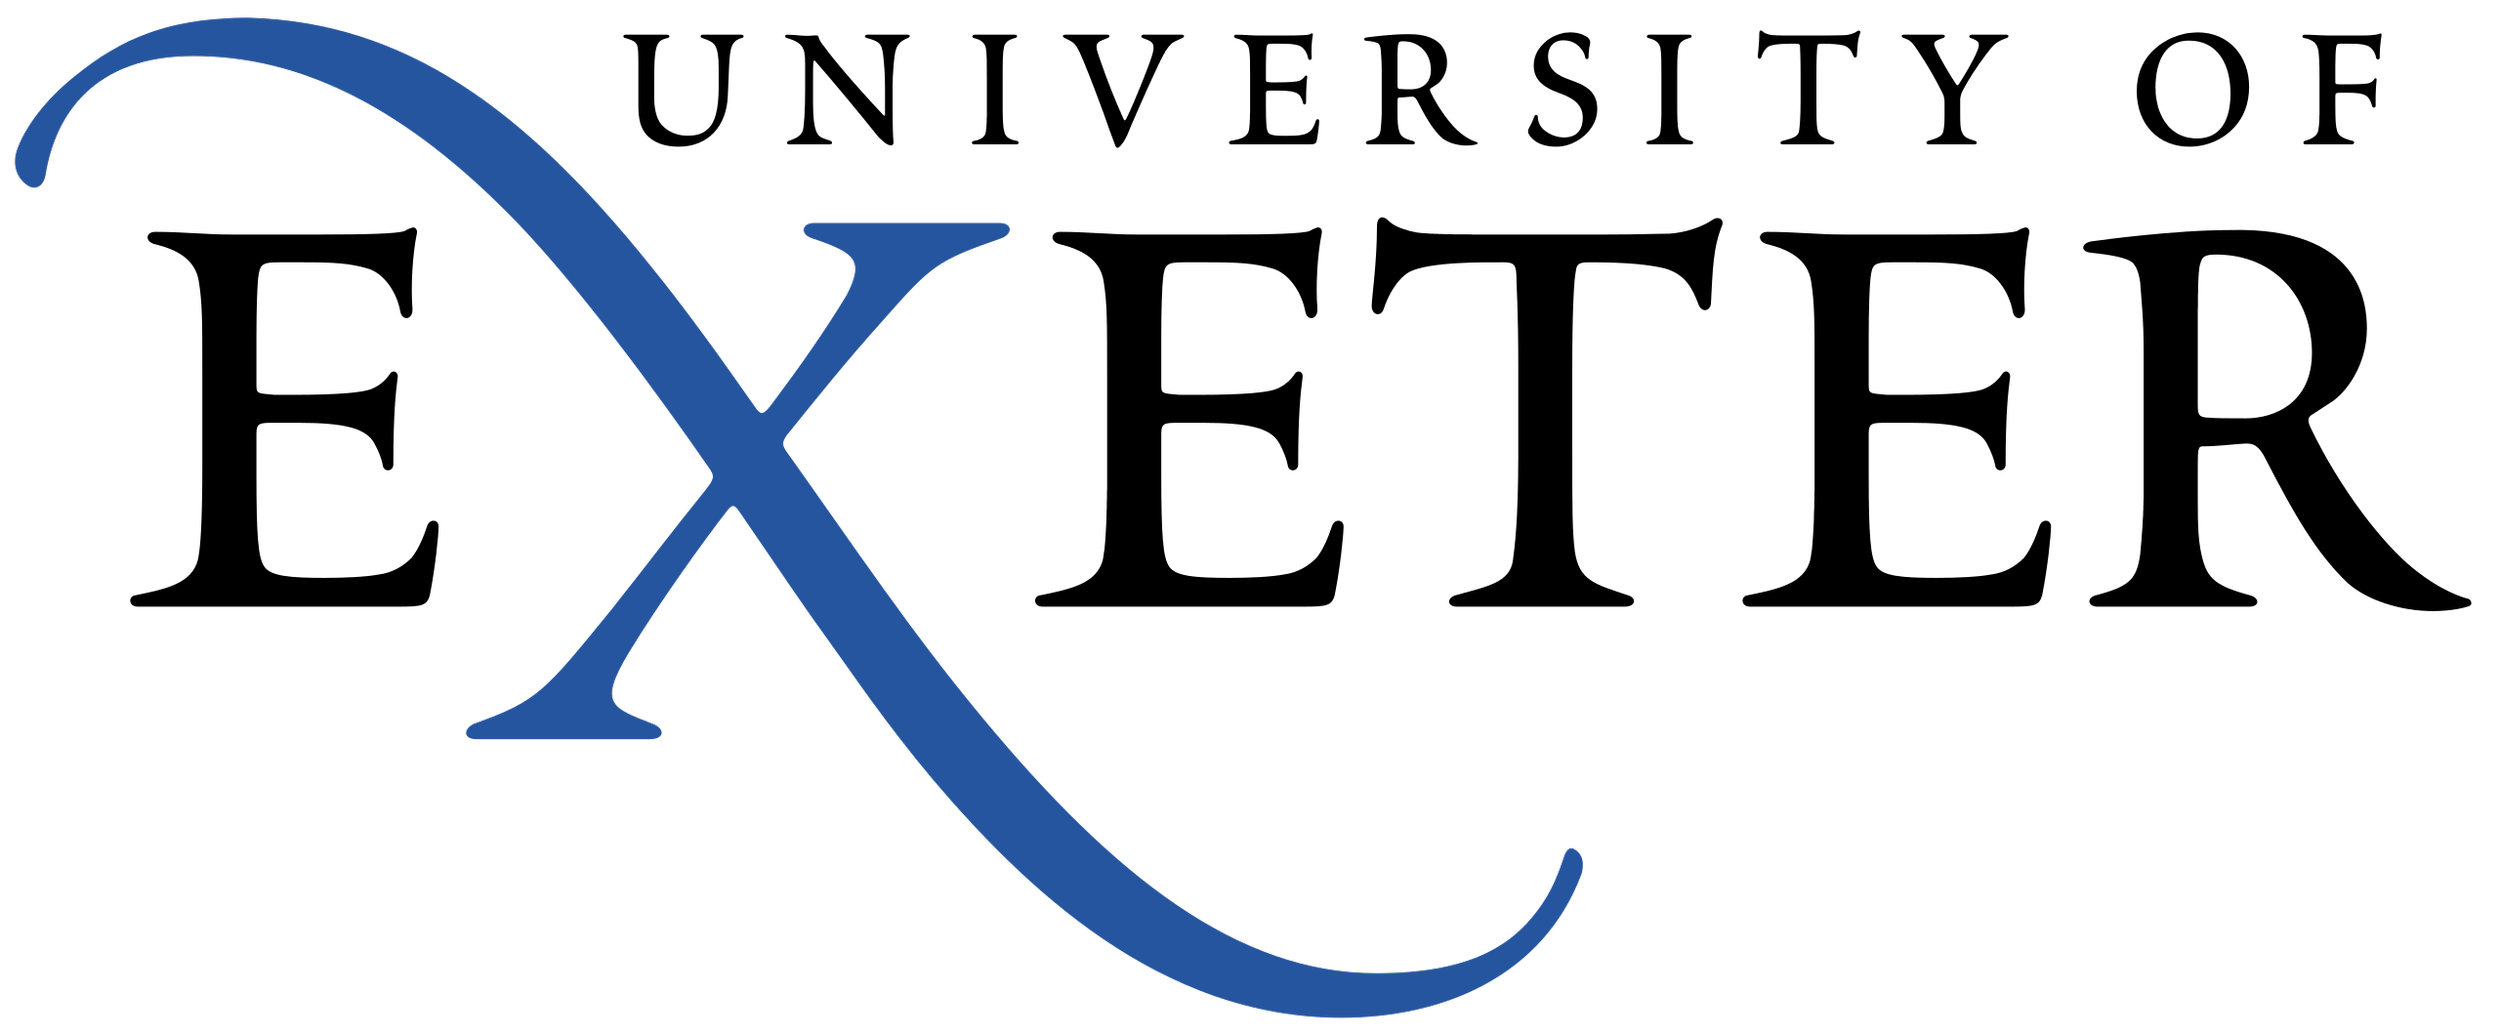 University_of_Exeter_logo.png